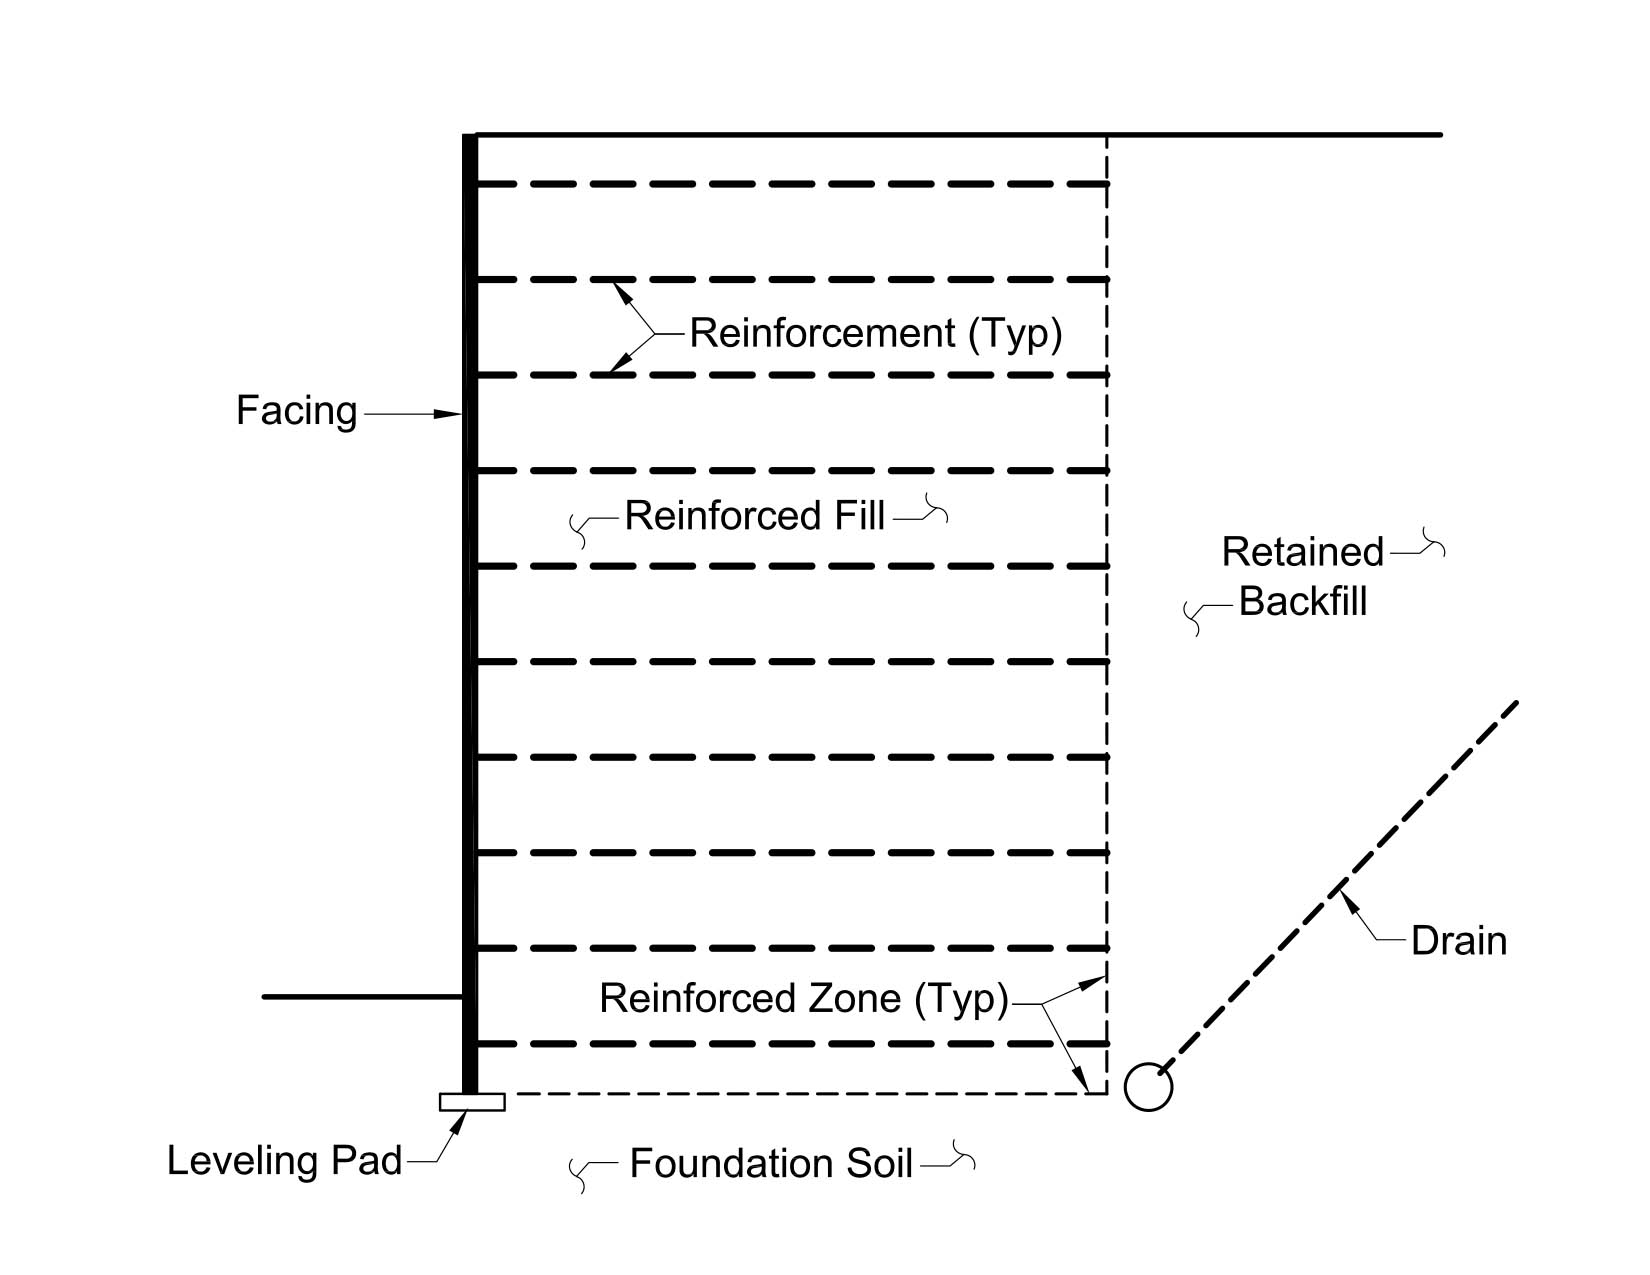 pad foundation cross section